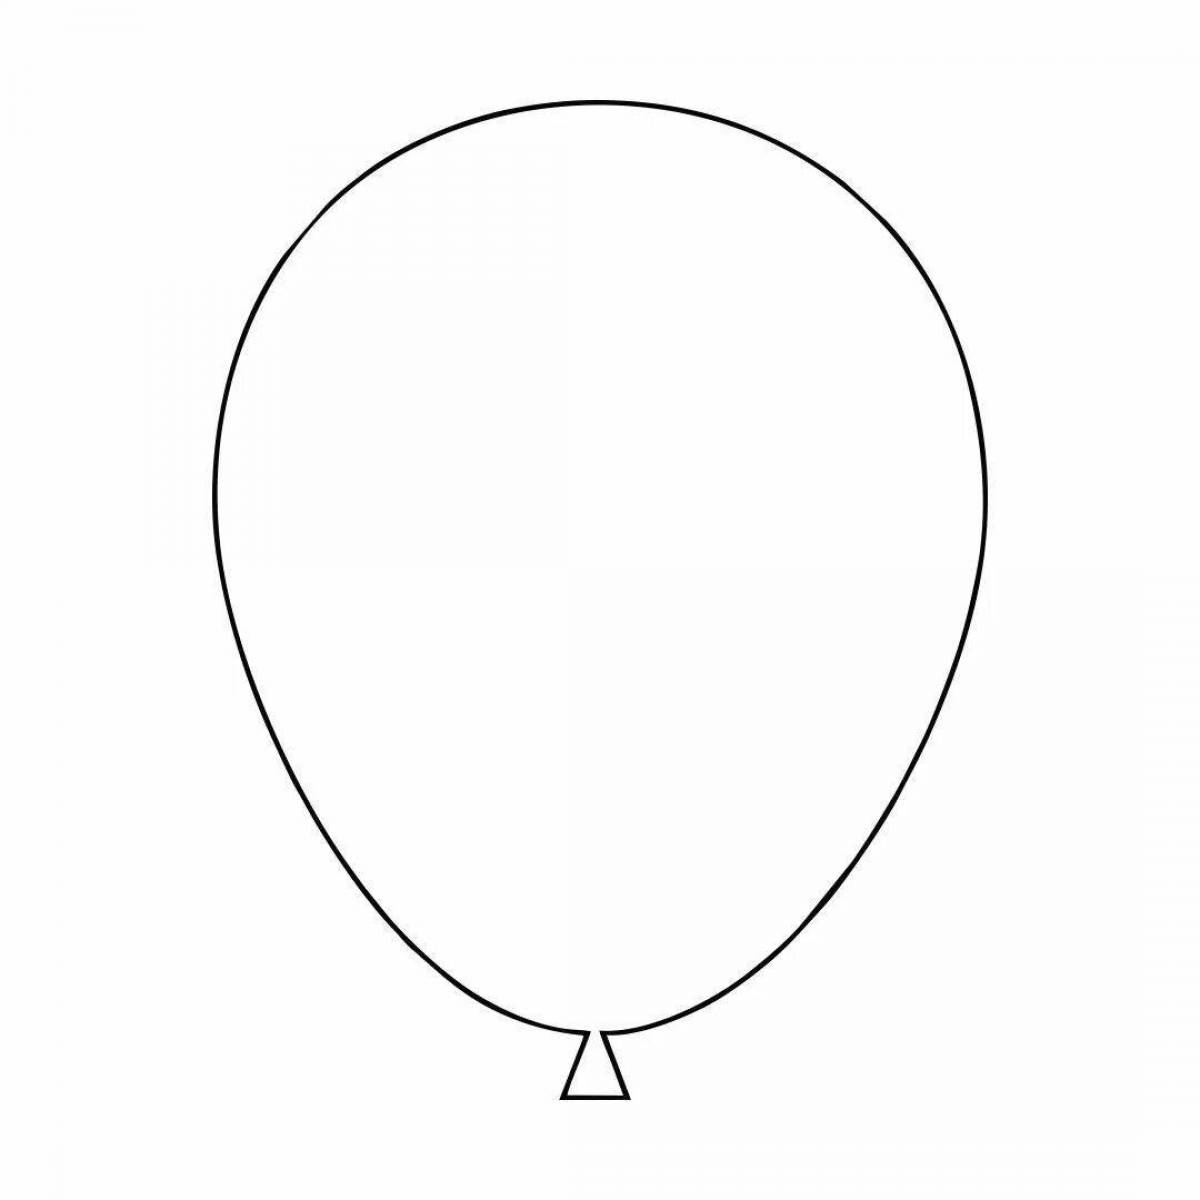 Трафареты воздушных шаров. Воздушный шар шаблон. Воздушный шар трафарет для вырезания. Воздушный шар шаблон для вырезания. Воздушный шарик трафарет.